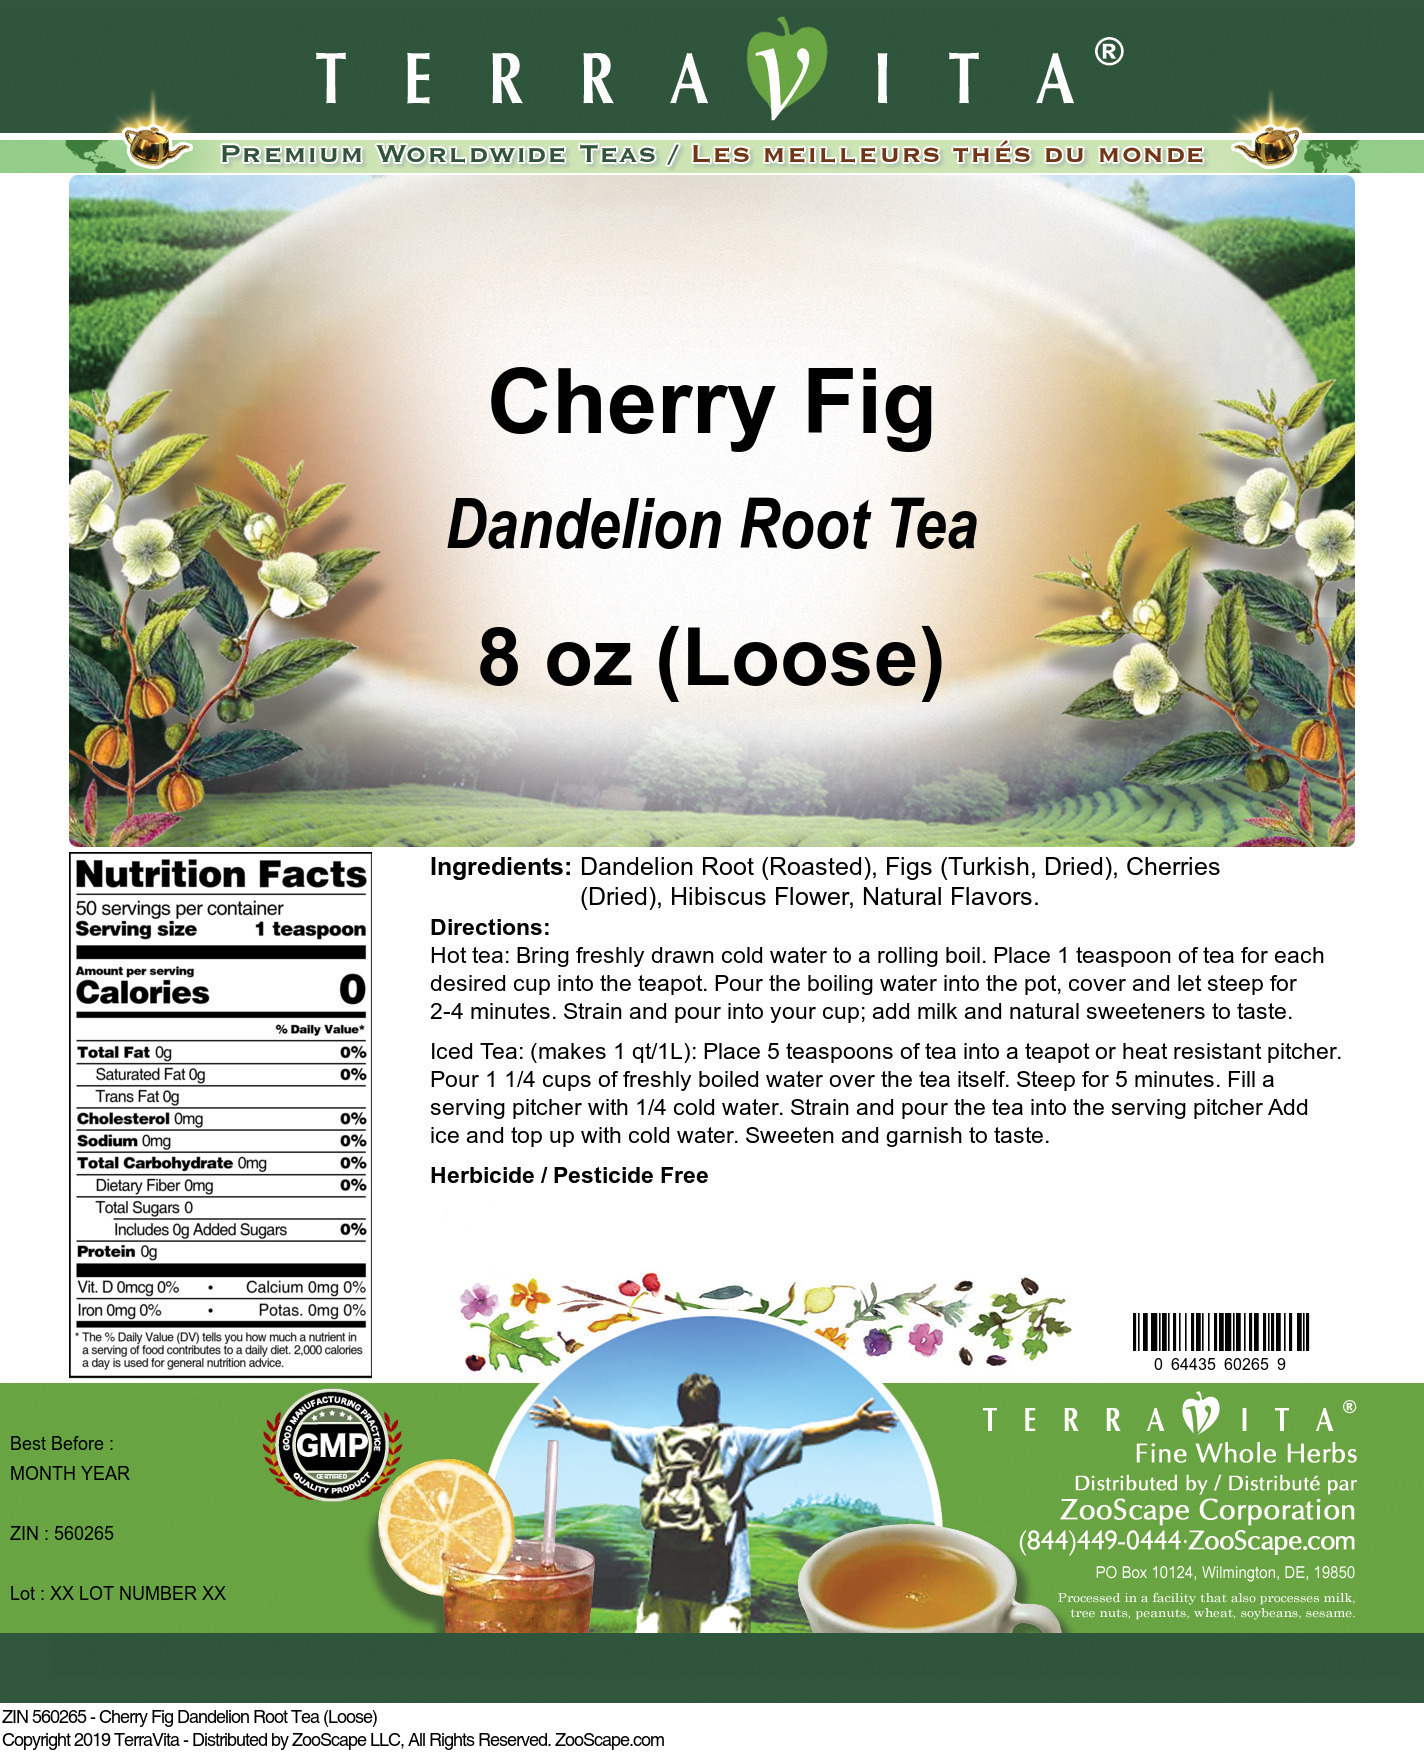 Cherry Fig Dandelion Root Tea (Loose) - Label